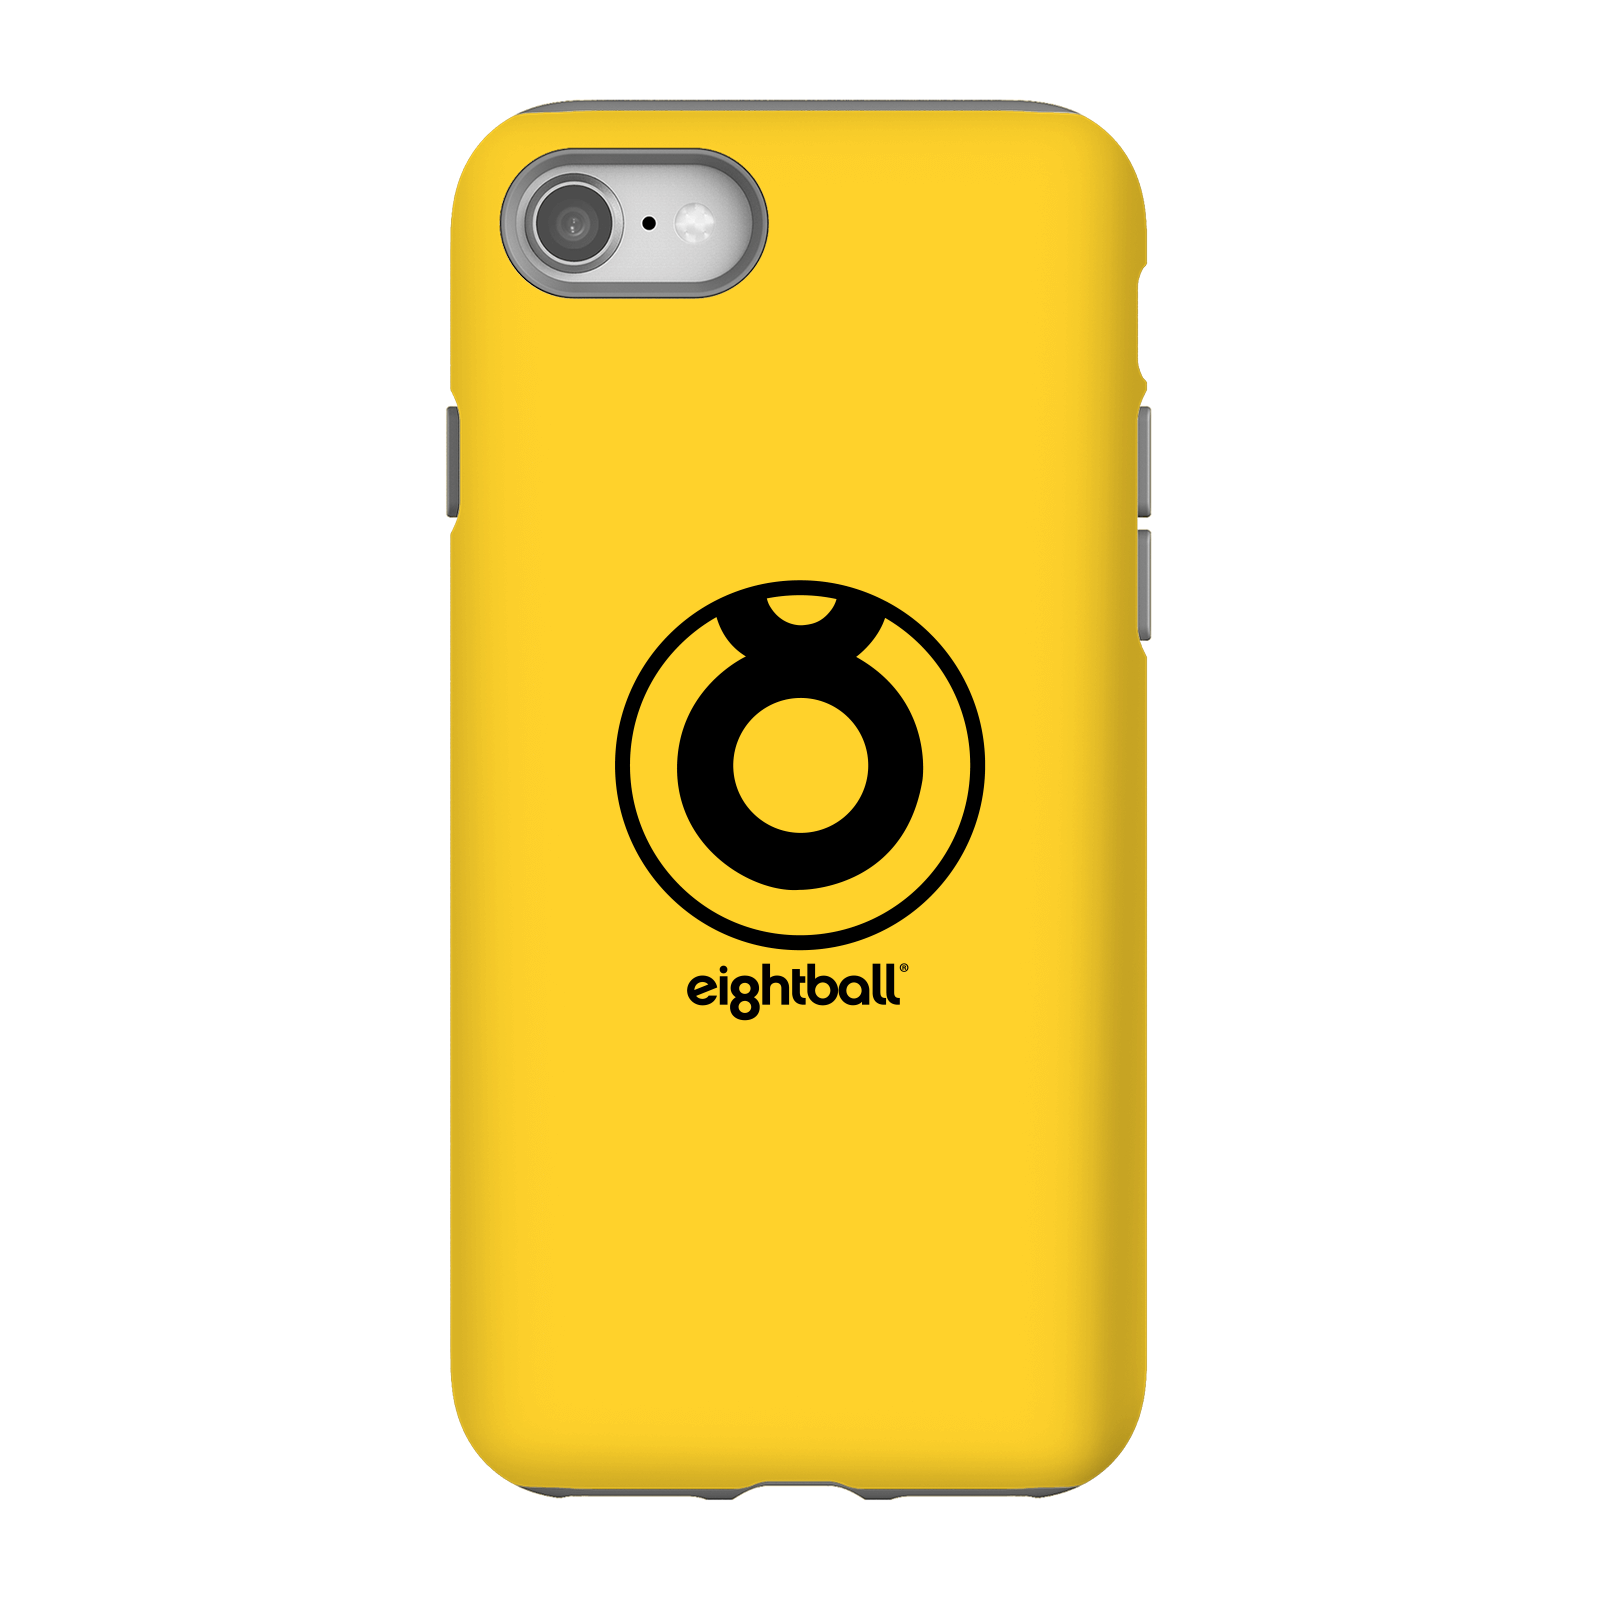 Funda Móvil Ei8htball Large Circle Logo para iPhone y Android - iPhone 8 - Carcasa doble capa - Mate